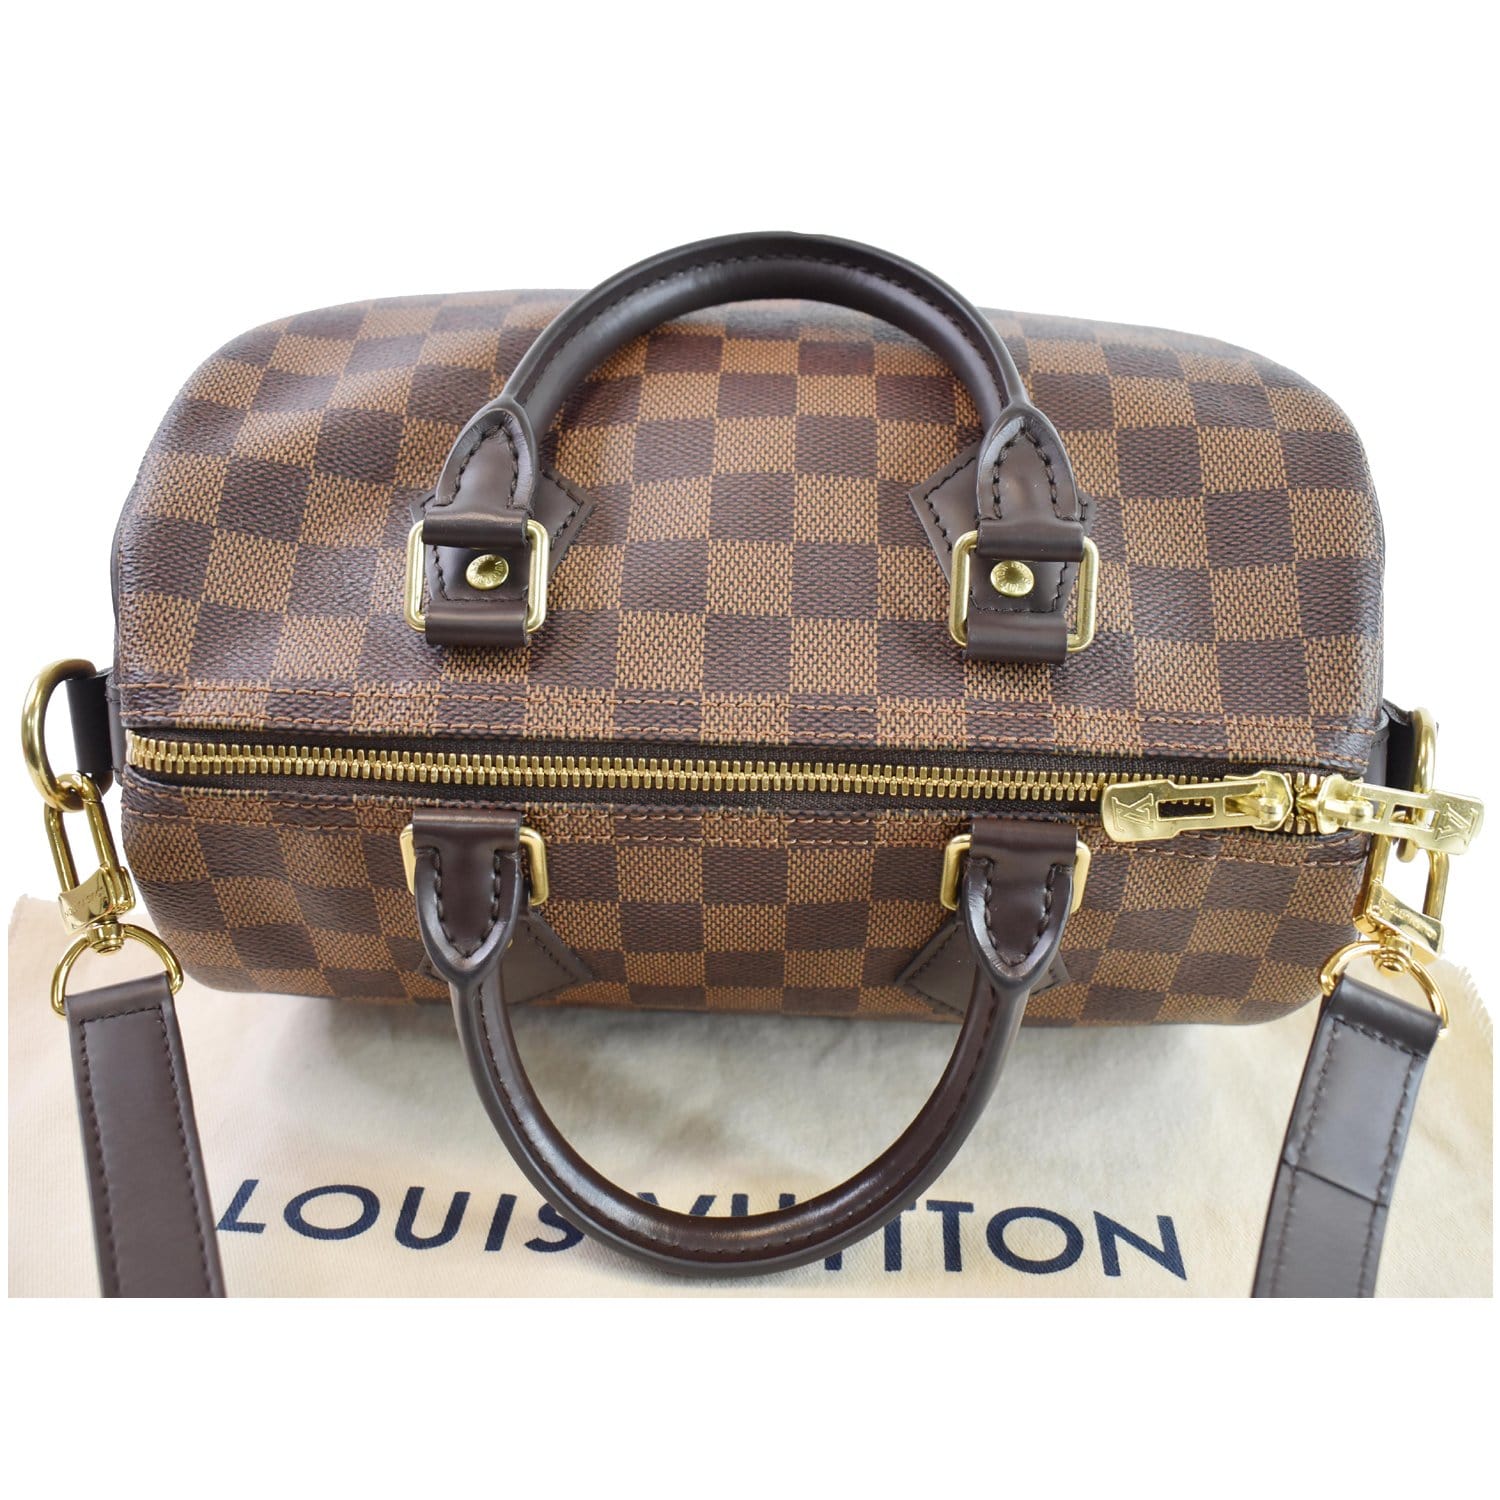 Louis Vuitton Speedy Bandouliere 25 in Damier Ebene without Shoulder Strap  - SOLD